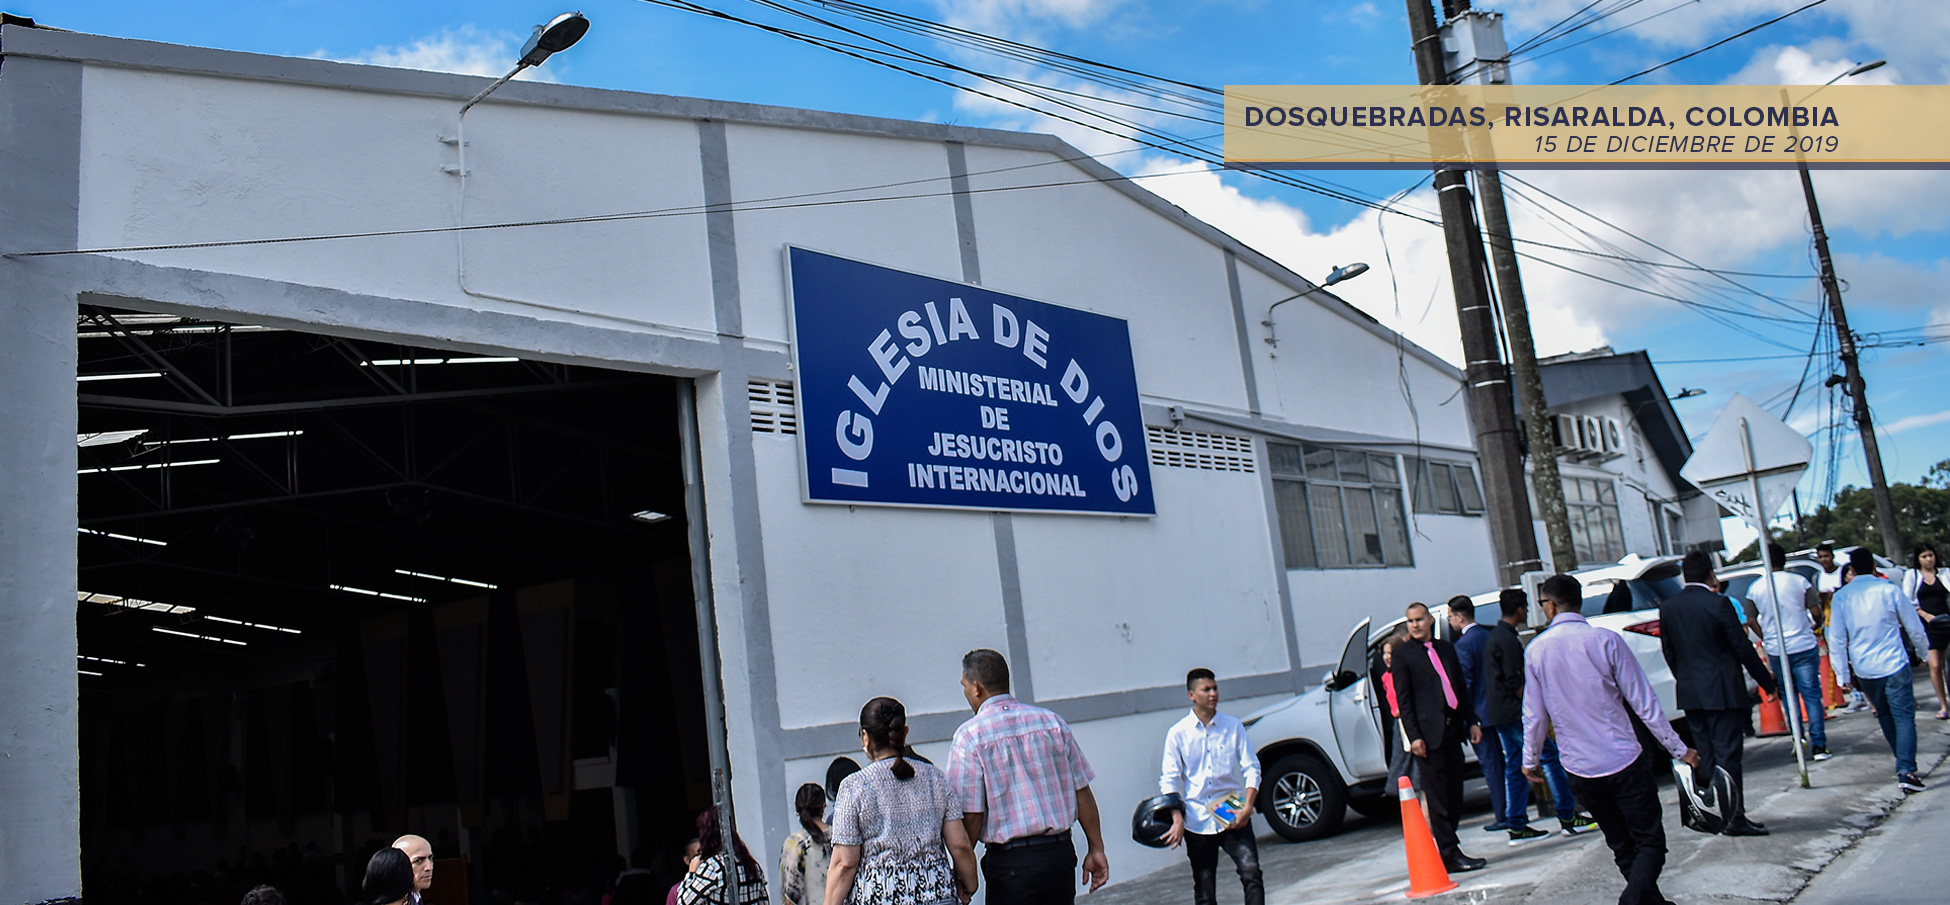 Apertura en La Popa Dosquebradas, Risaralda (Colombia) - Iglesia de Dios  Ministerial de Jesucristo Internacional - IDMJI